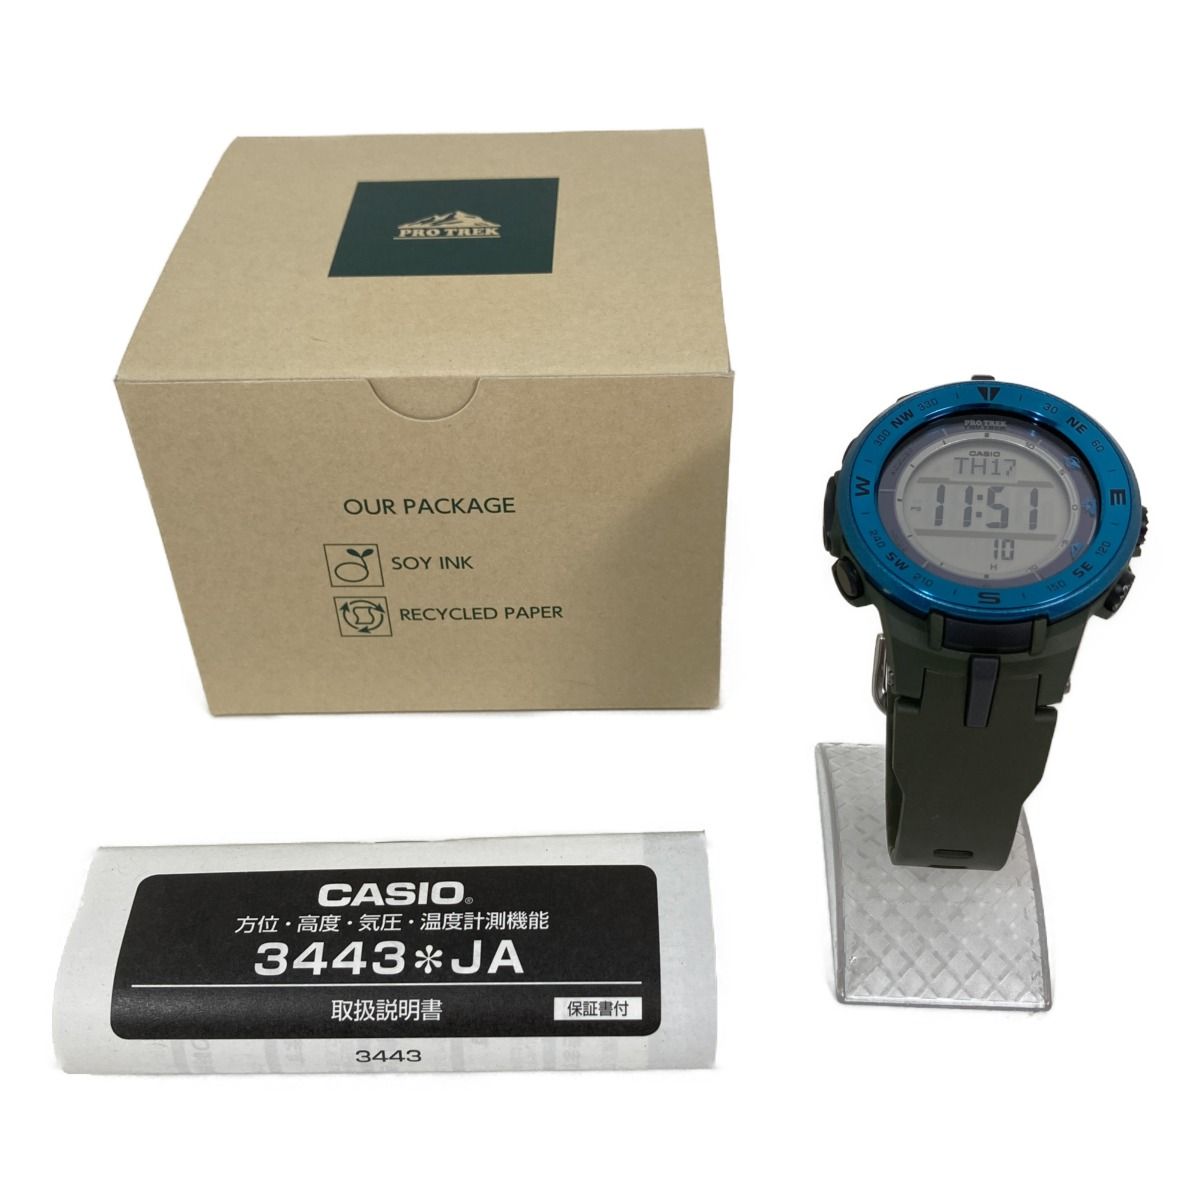 ◎◎CASIO カシオ PRO TREK プロトレック タフソーラー 腕時計 PRG-330 ...